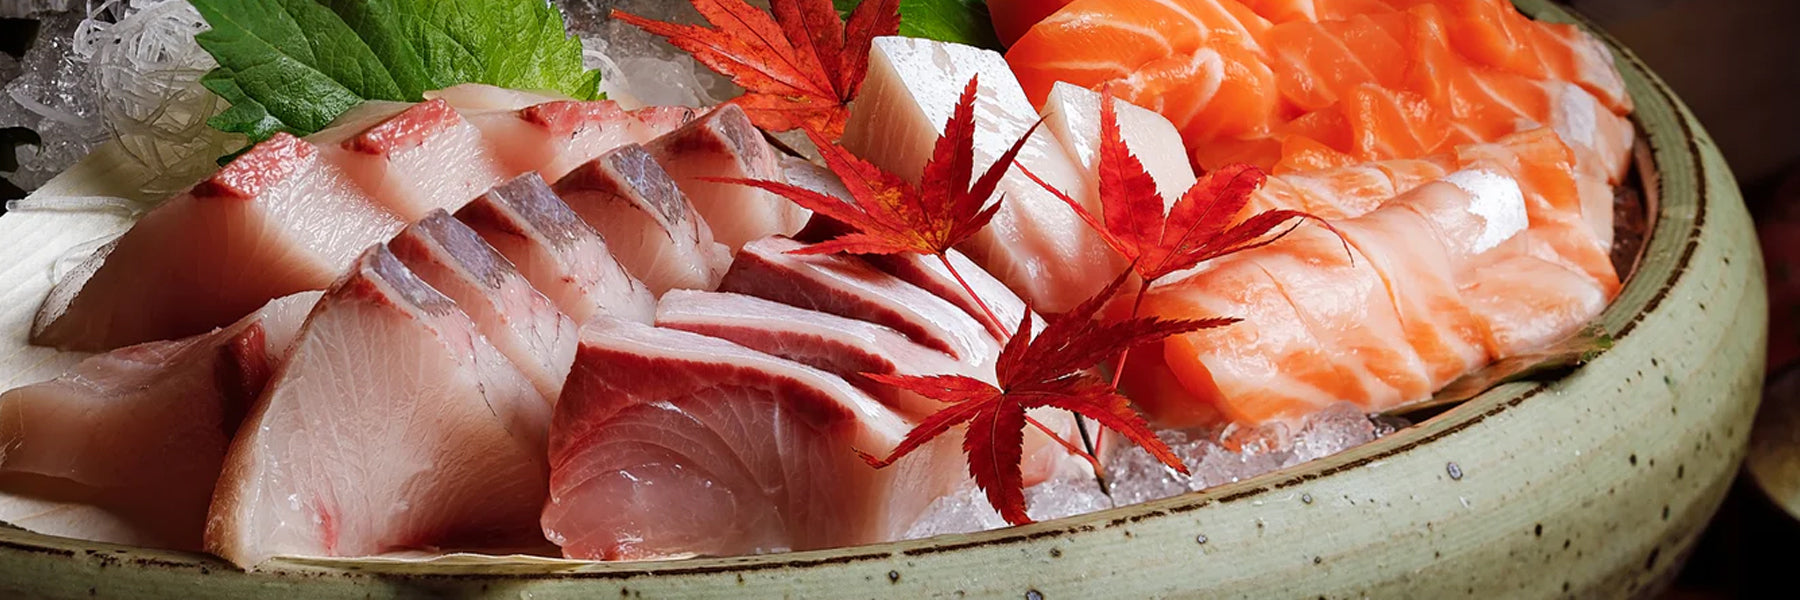 Sashimi Online, Salmon, Kingfish, Tuna & more with home delivery